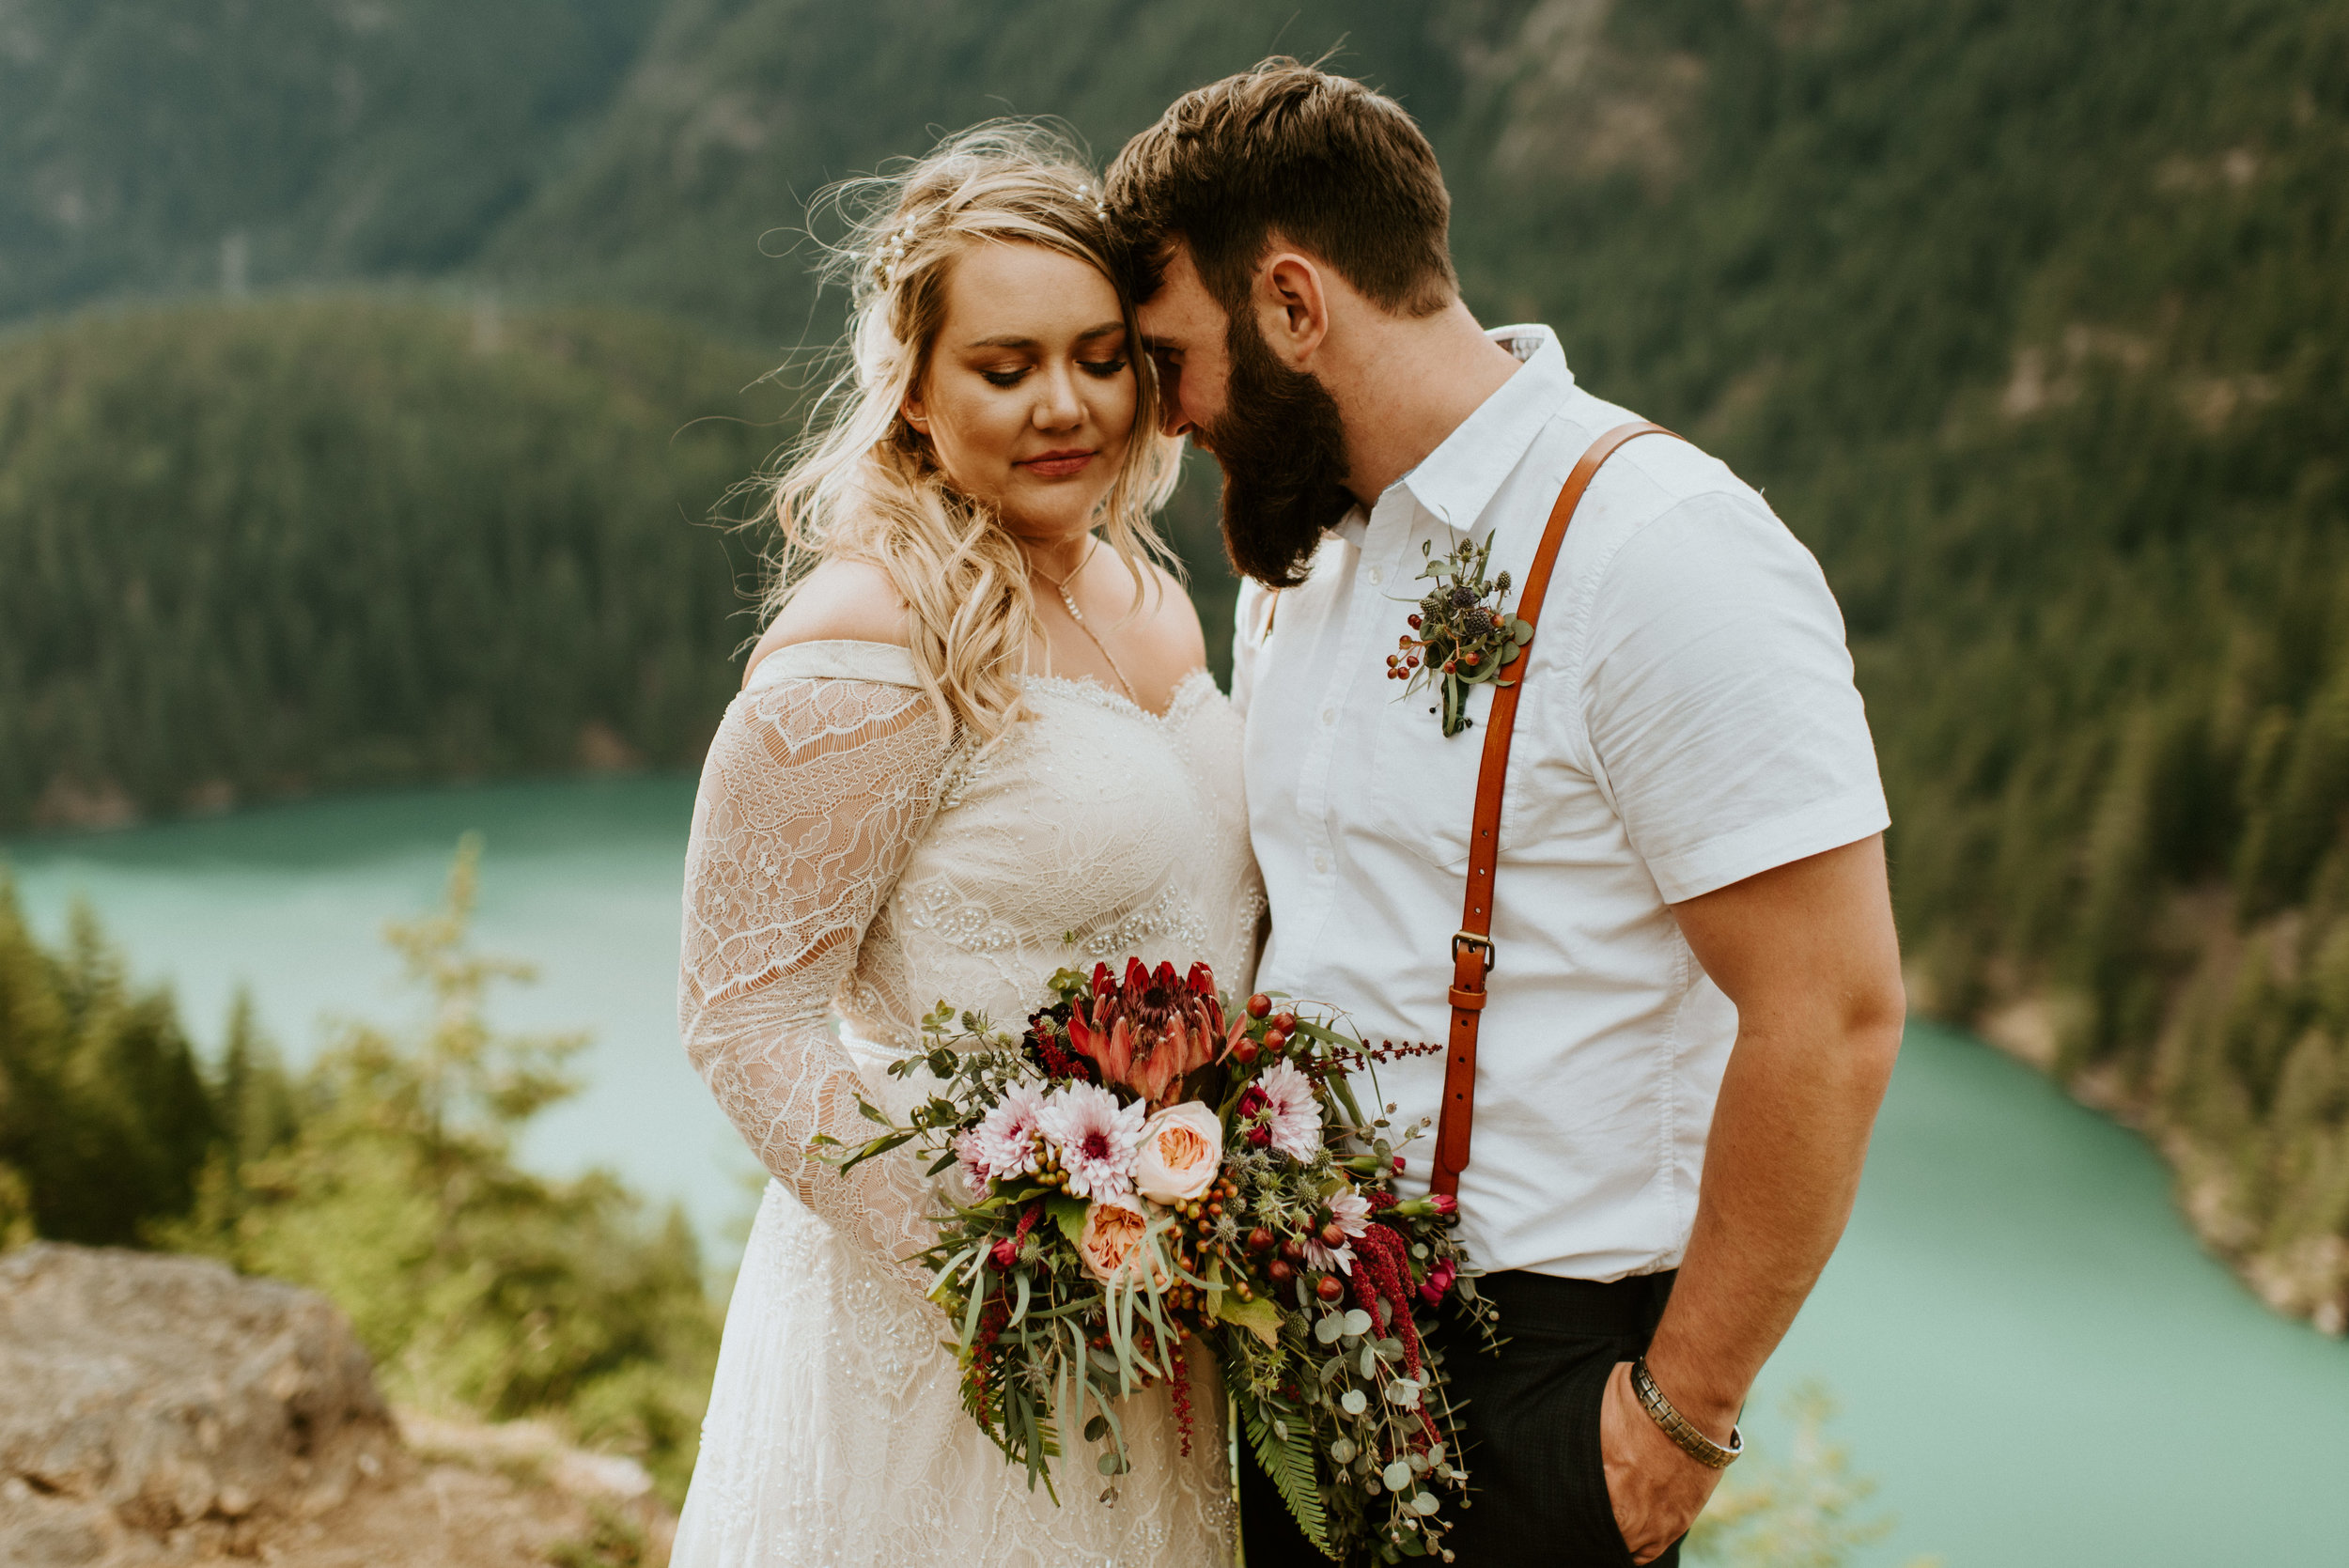 Kelsea + Perry - Diablo Lake Elopement - Kamra Fuller Photography - Seattle Elopement Photographer - North Cascades Elopement Photographer - Mt. Baker Wedding Photographer